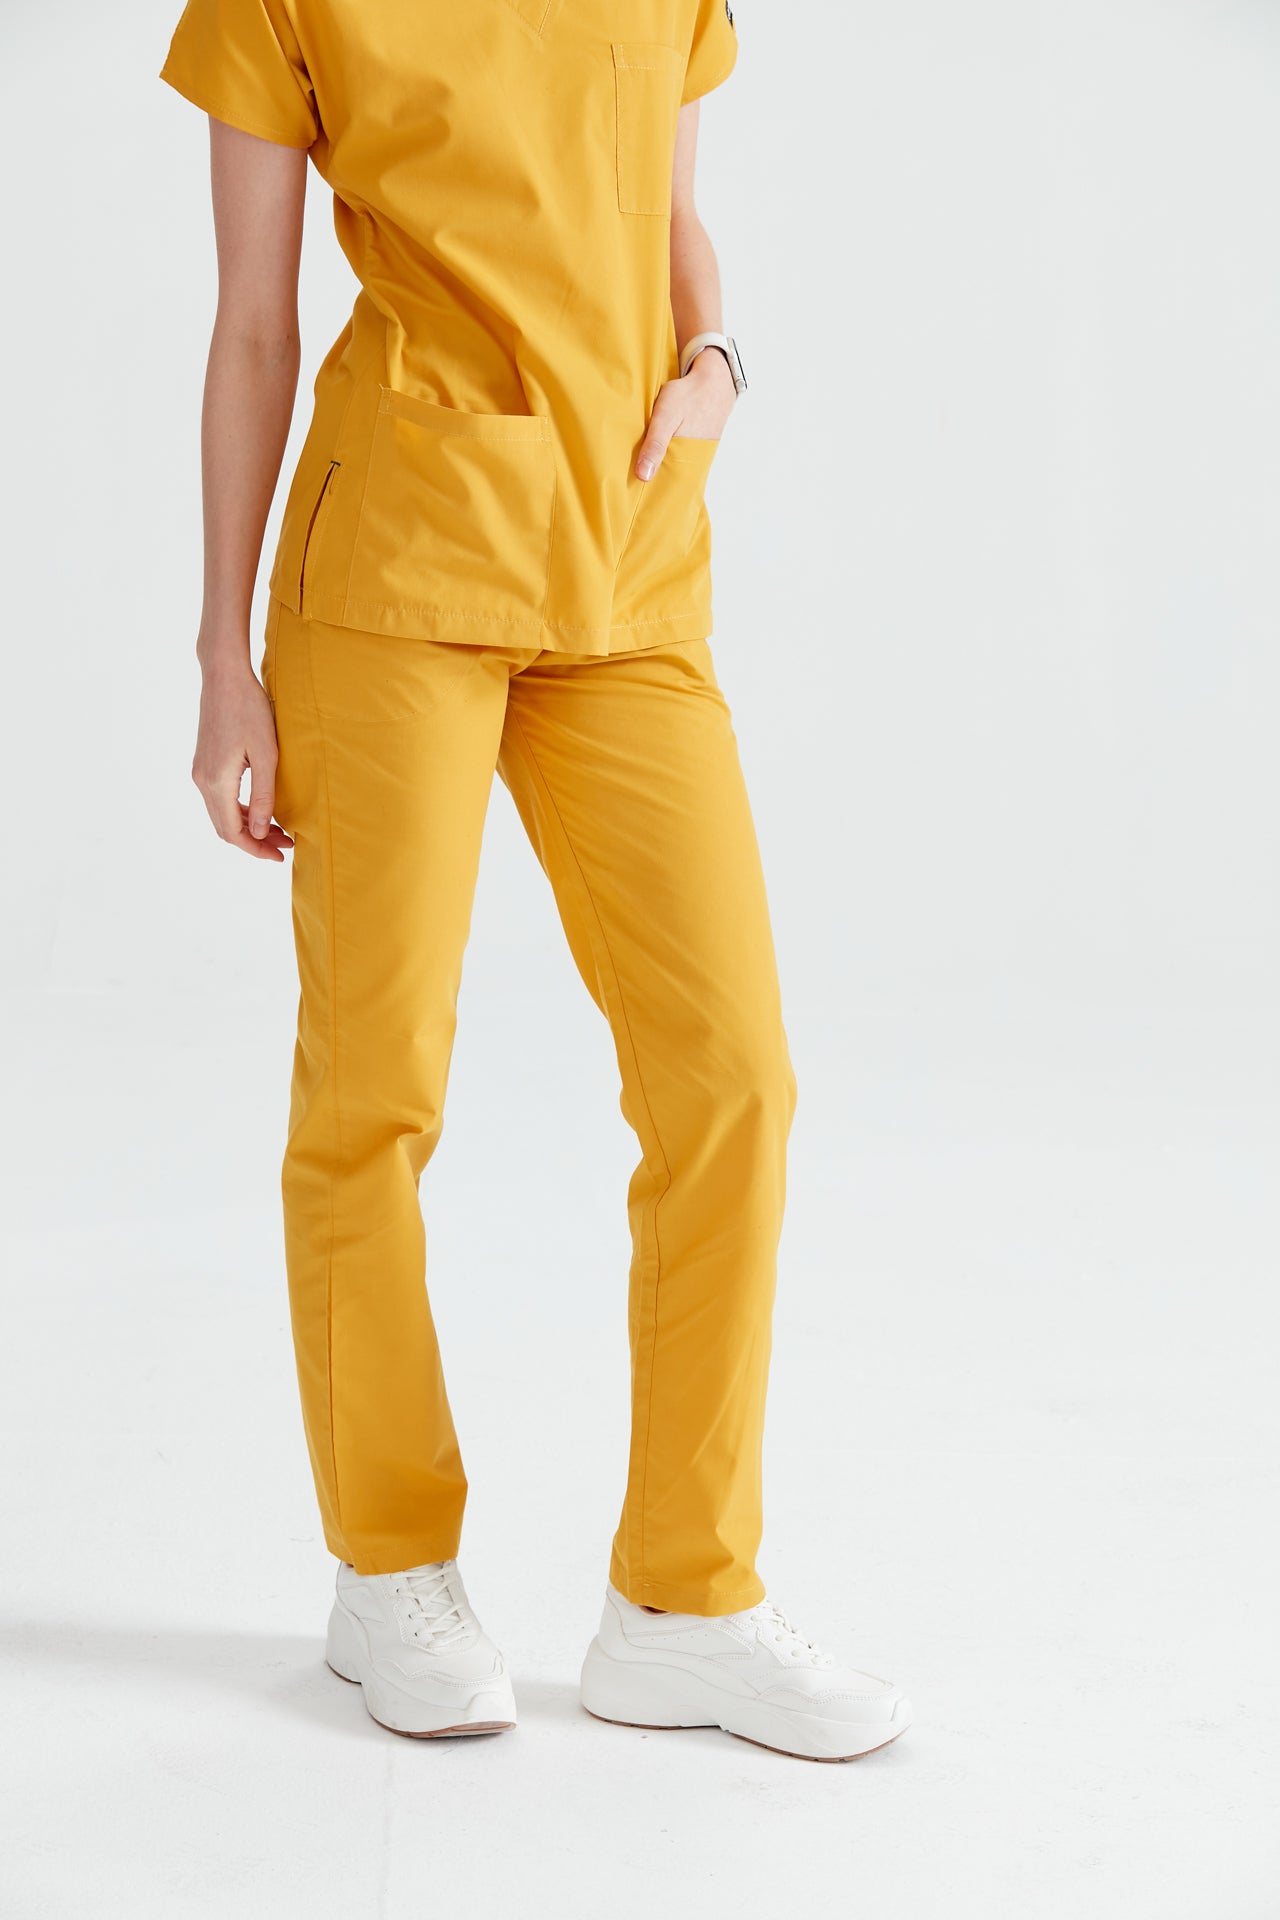 Asistenta medicala imbracata in pantaloni Yellow sun, vedere din fata  